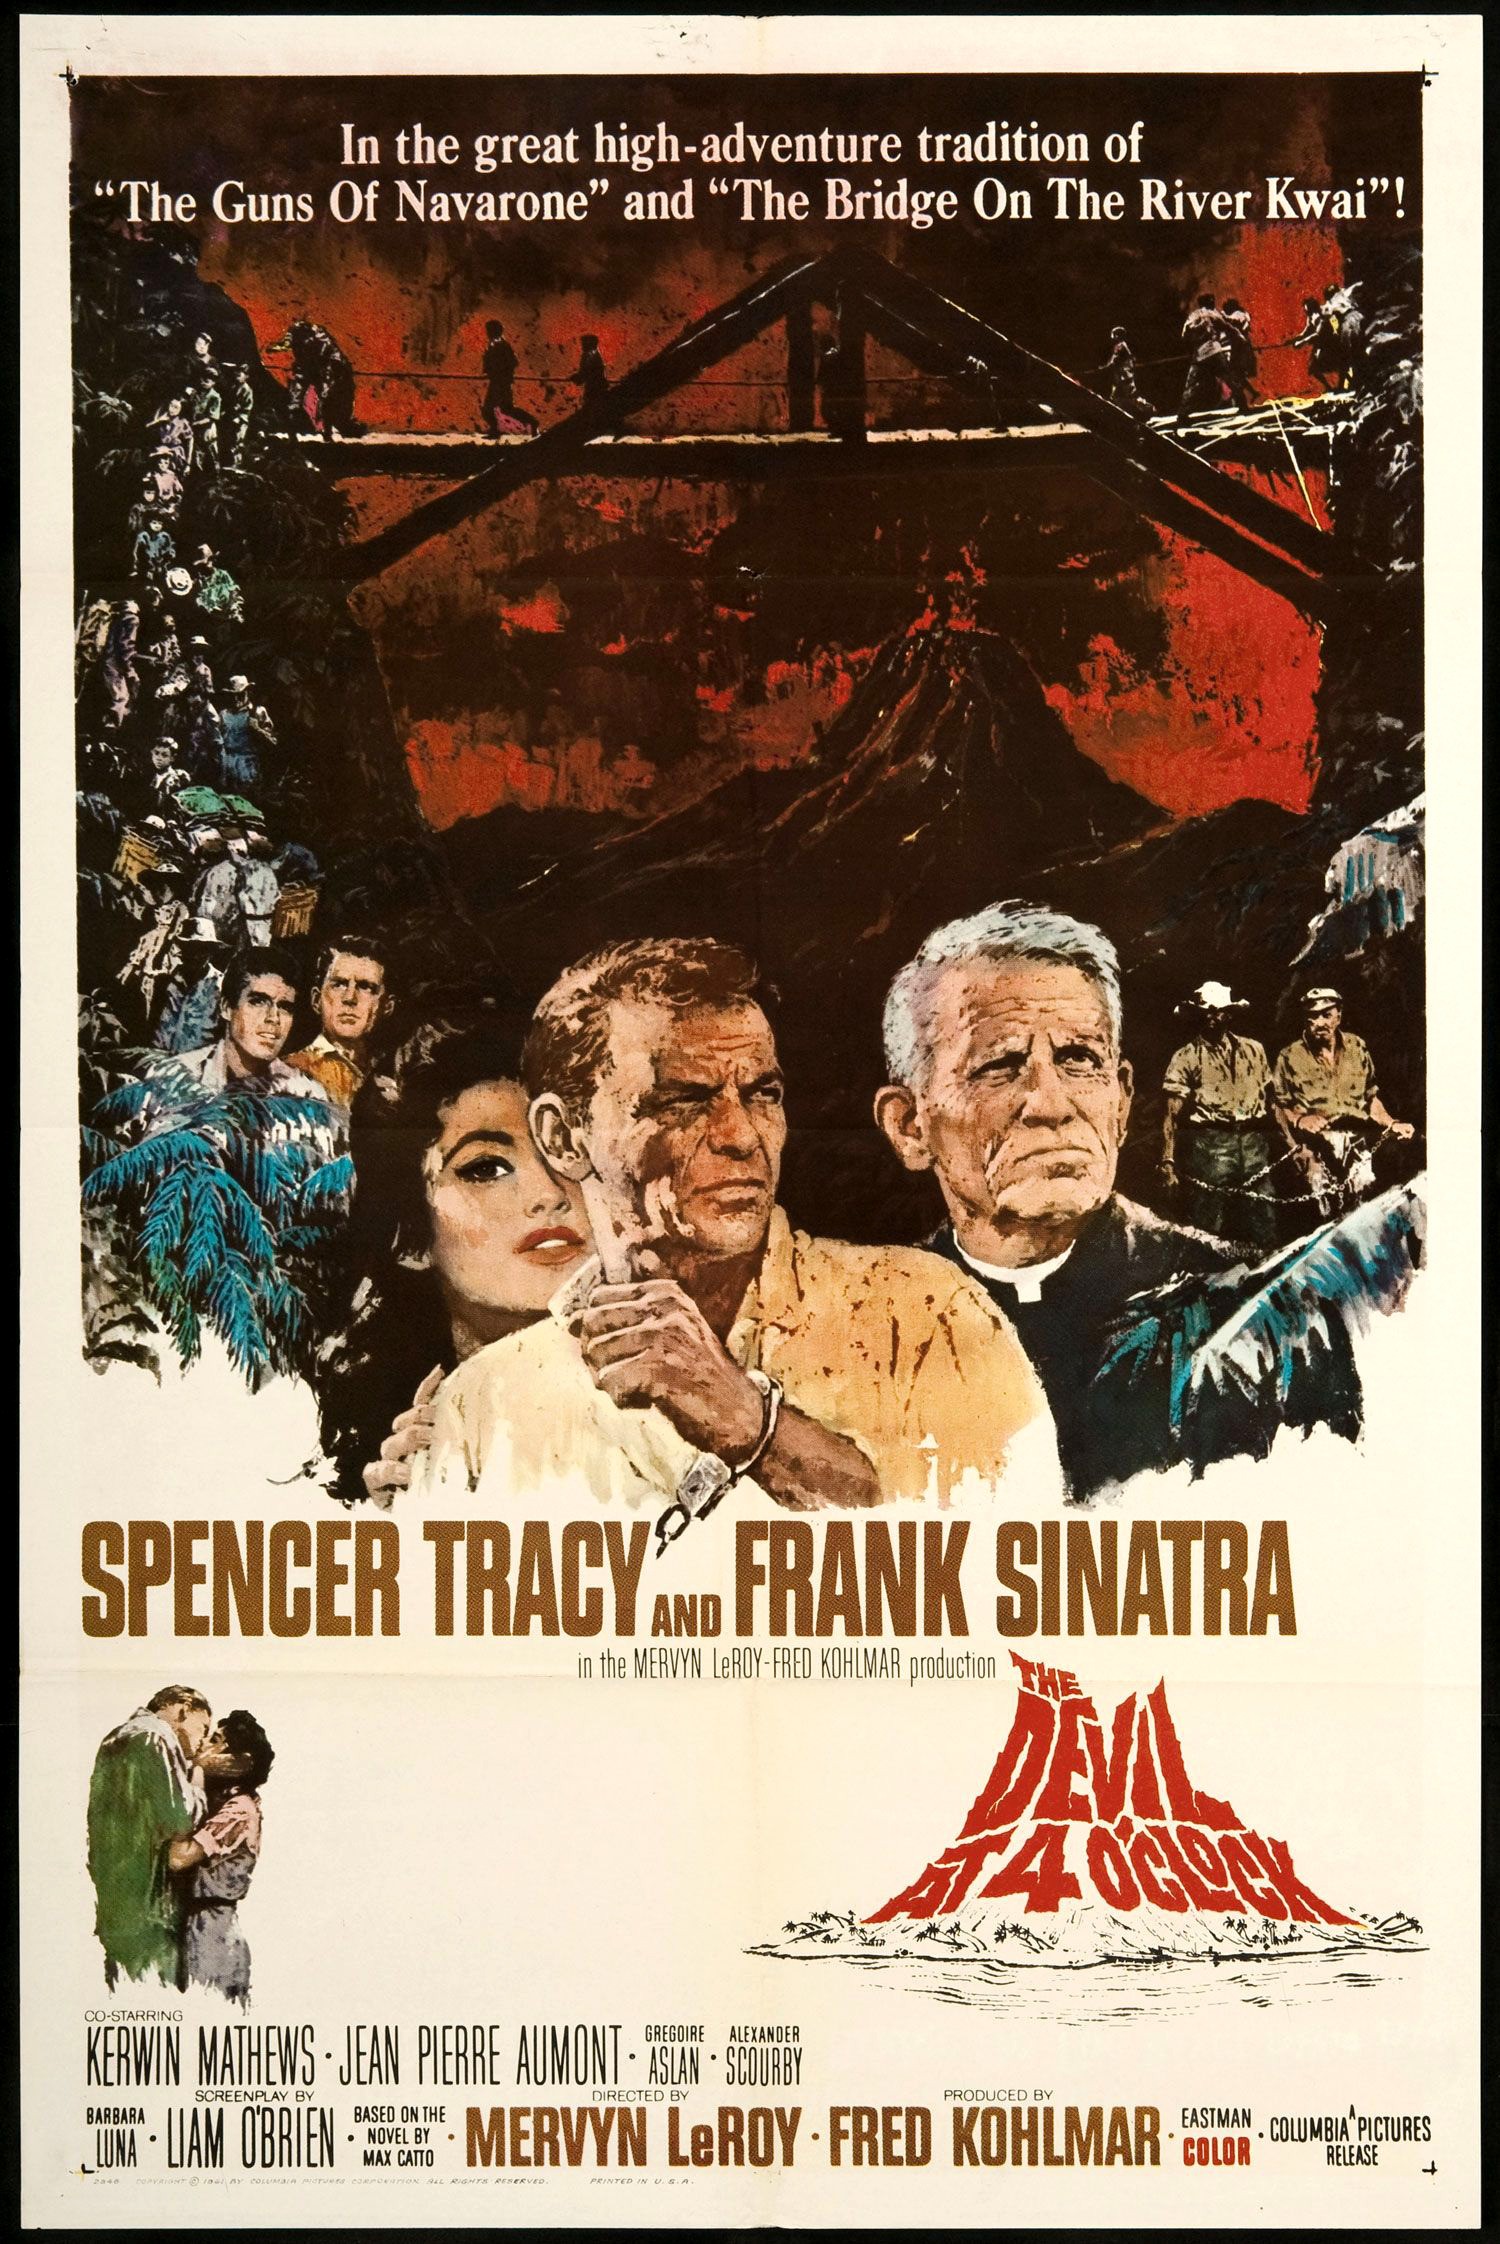 Mega Sized Movie Poster Image for The Devil at 4 O'Clock 